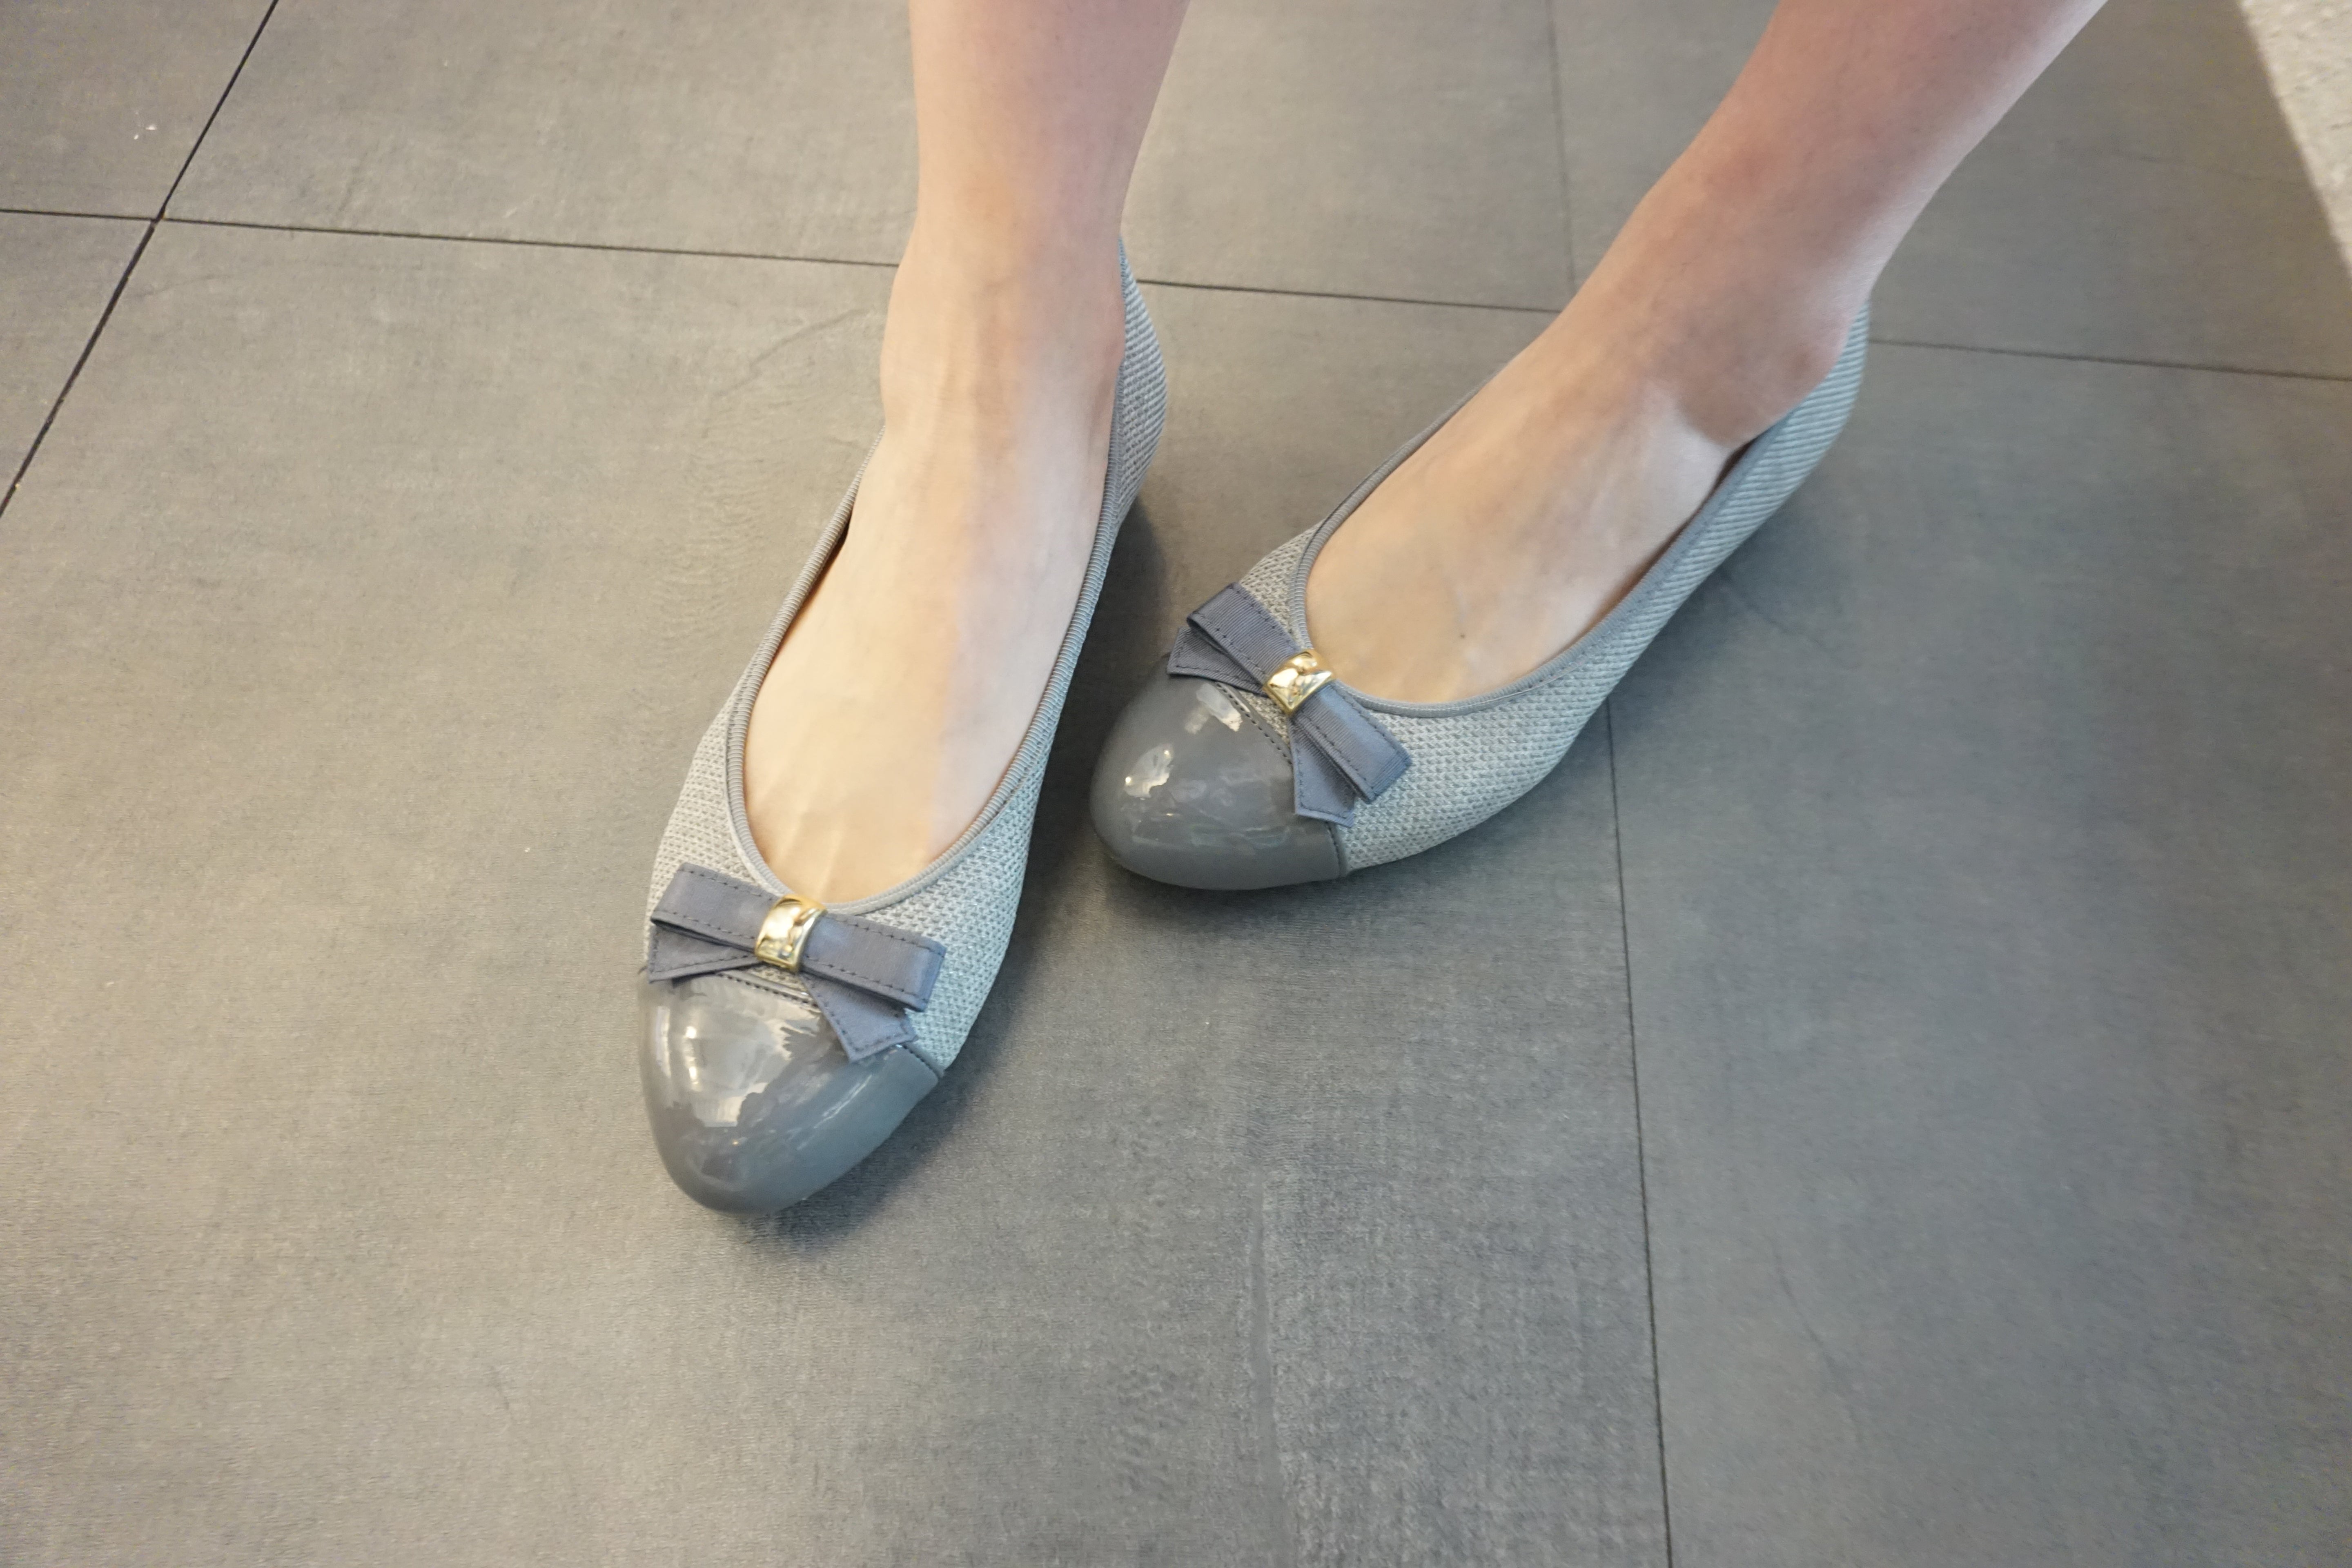 Japan Fashion Flats with Bow (Soft Soles)-ARCH CONTACT-BE-JP/TW Size-1: 230-偉豐鞋 WELL SHOE HK-Well Shoe-偉豐鞋-偉豐網-荃灣鞋店-Functional shoes-Hong Kong Tsuen Wan Shoe Store-Tai Wan Shoe-Japan Shoe-高品質功能鞋-台灣進口鞋-日本進口鞋-High-quality shoes-鞋類配件-荃灣進口鞋-香港鞋店-優質鞋類產品-水靴-帆布鞋-廚師鞋-香港鞋品牌-Hong Kong Shoes brand-長者鞋-Hong Kong Rain Boots-Kitchen shoes-Cruthes-Slipper-Well Shoe Hong Kong-Anello-Arriba-休閒鞋-舒適鞋-健康鞋-皮鞋-Healthy shoes-Leather shoes-Hiking shoes